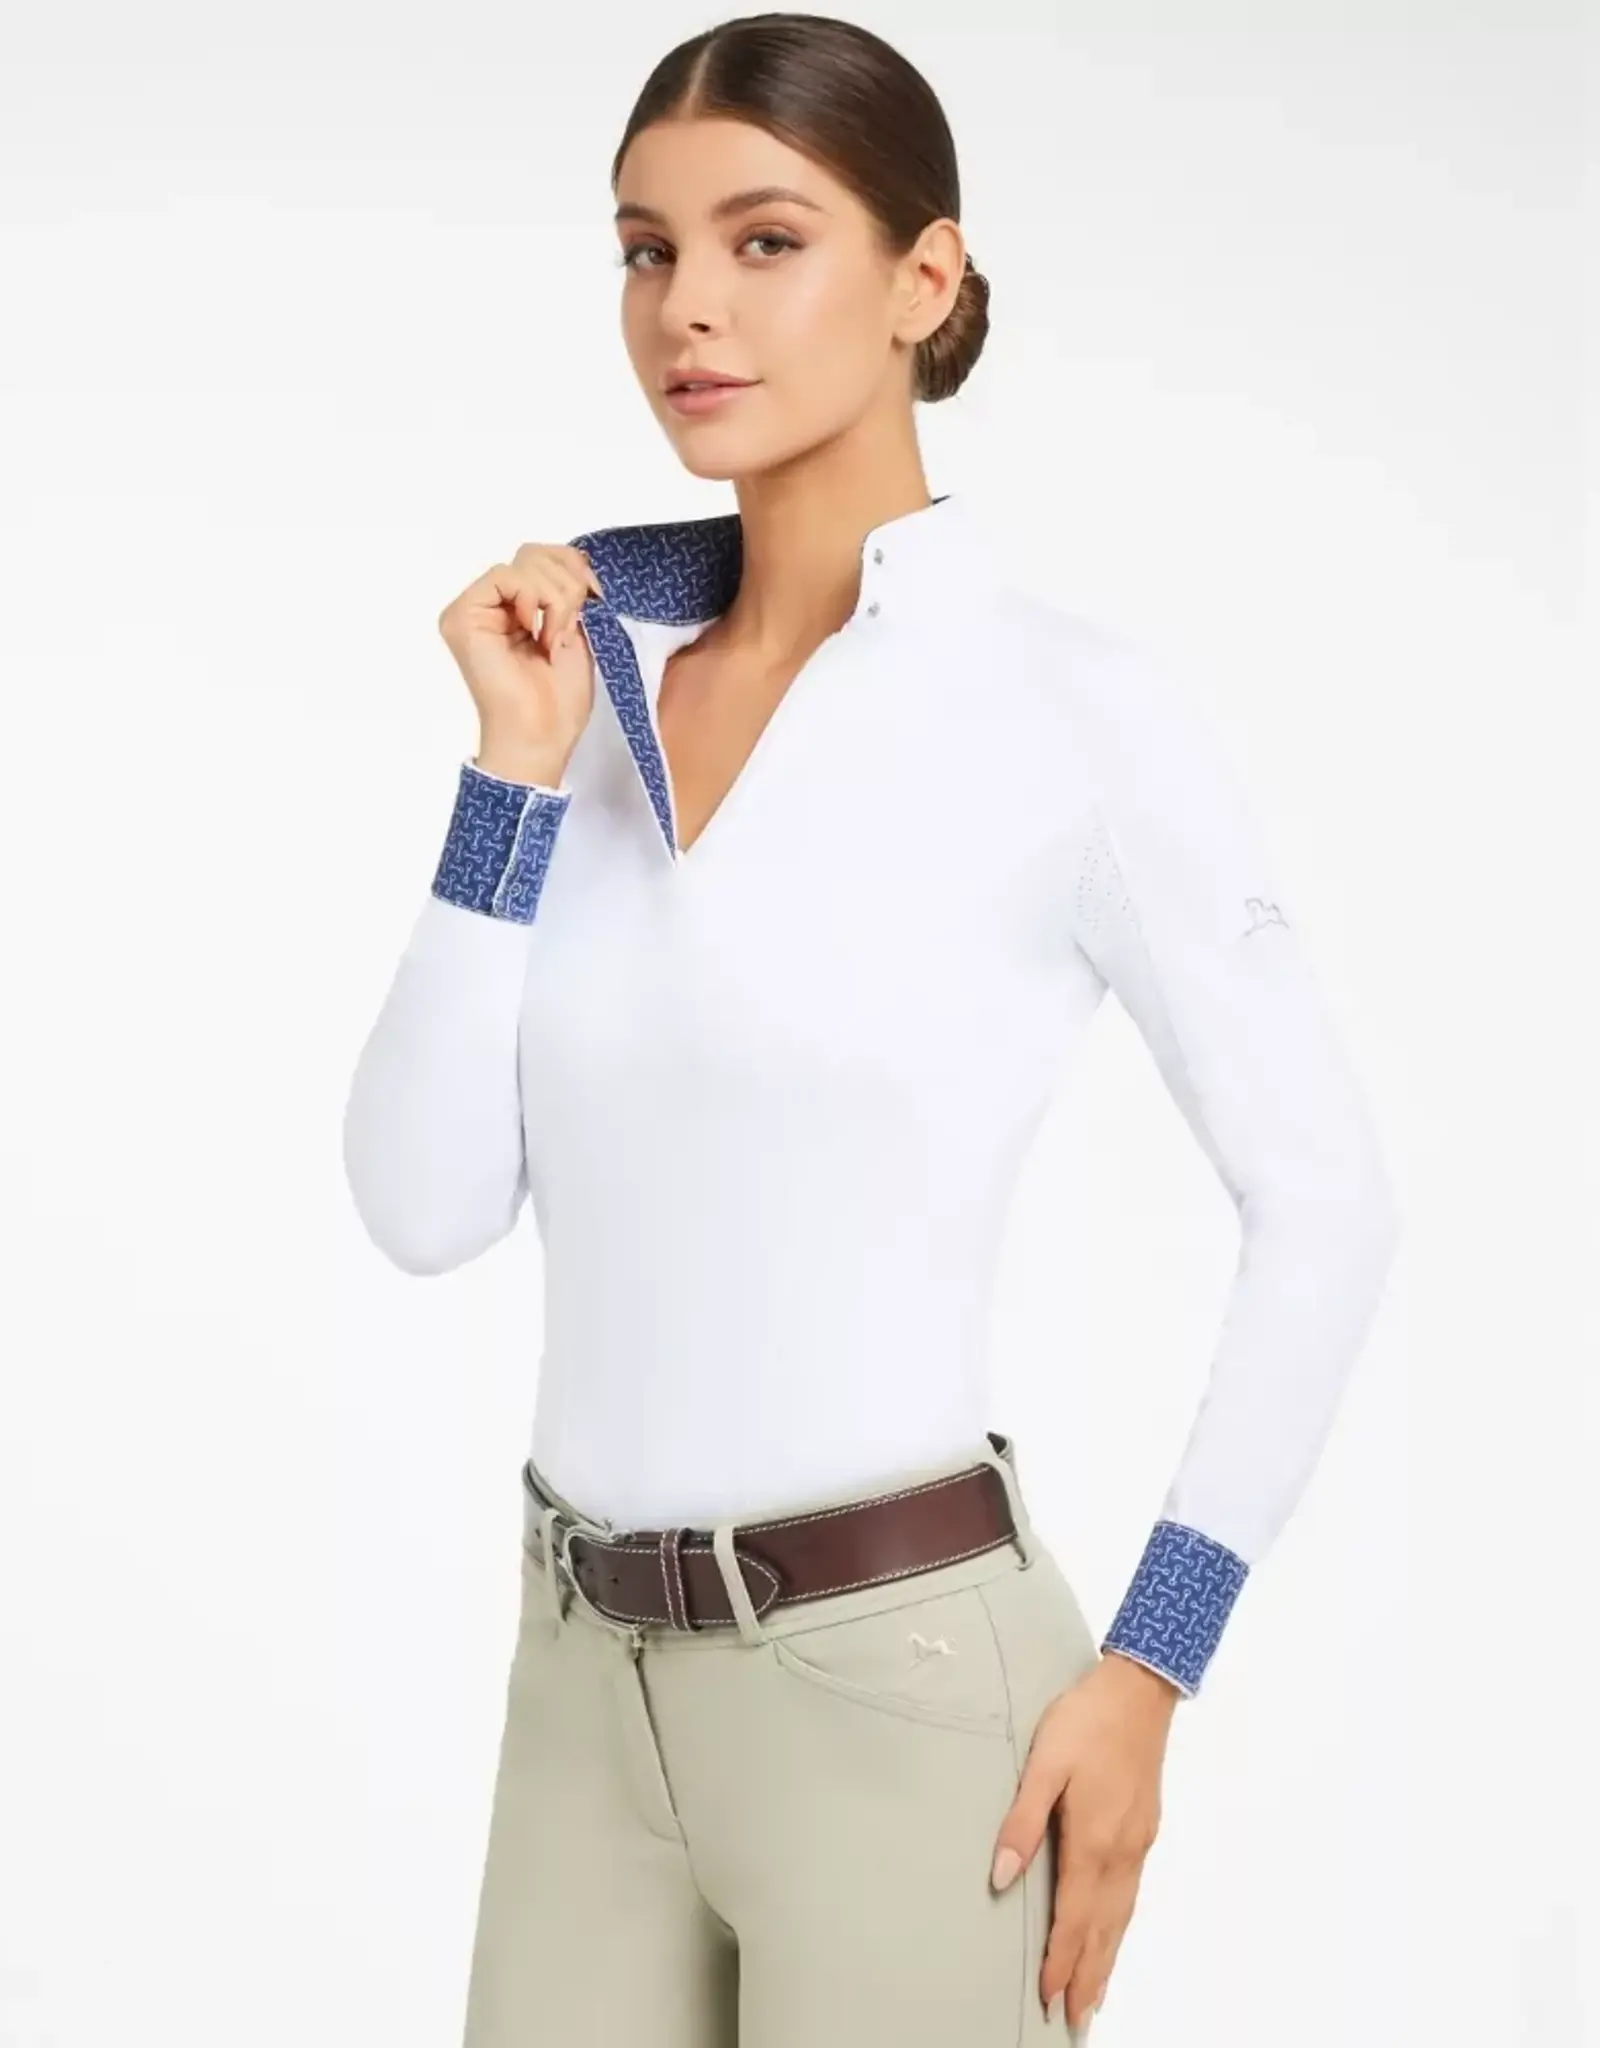 R.J. Classic's Ladies' Tori Long Sleeve Show Shirt